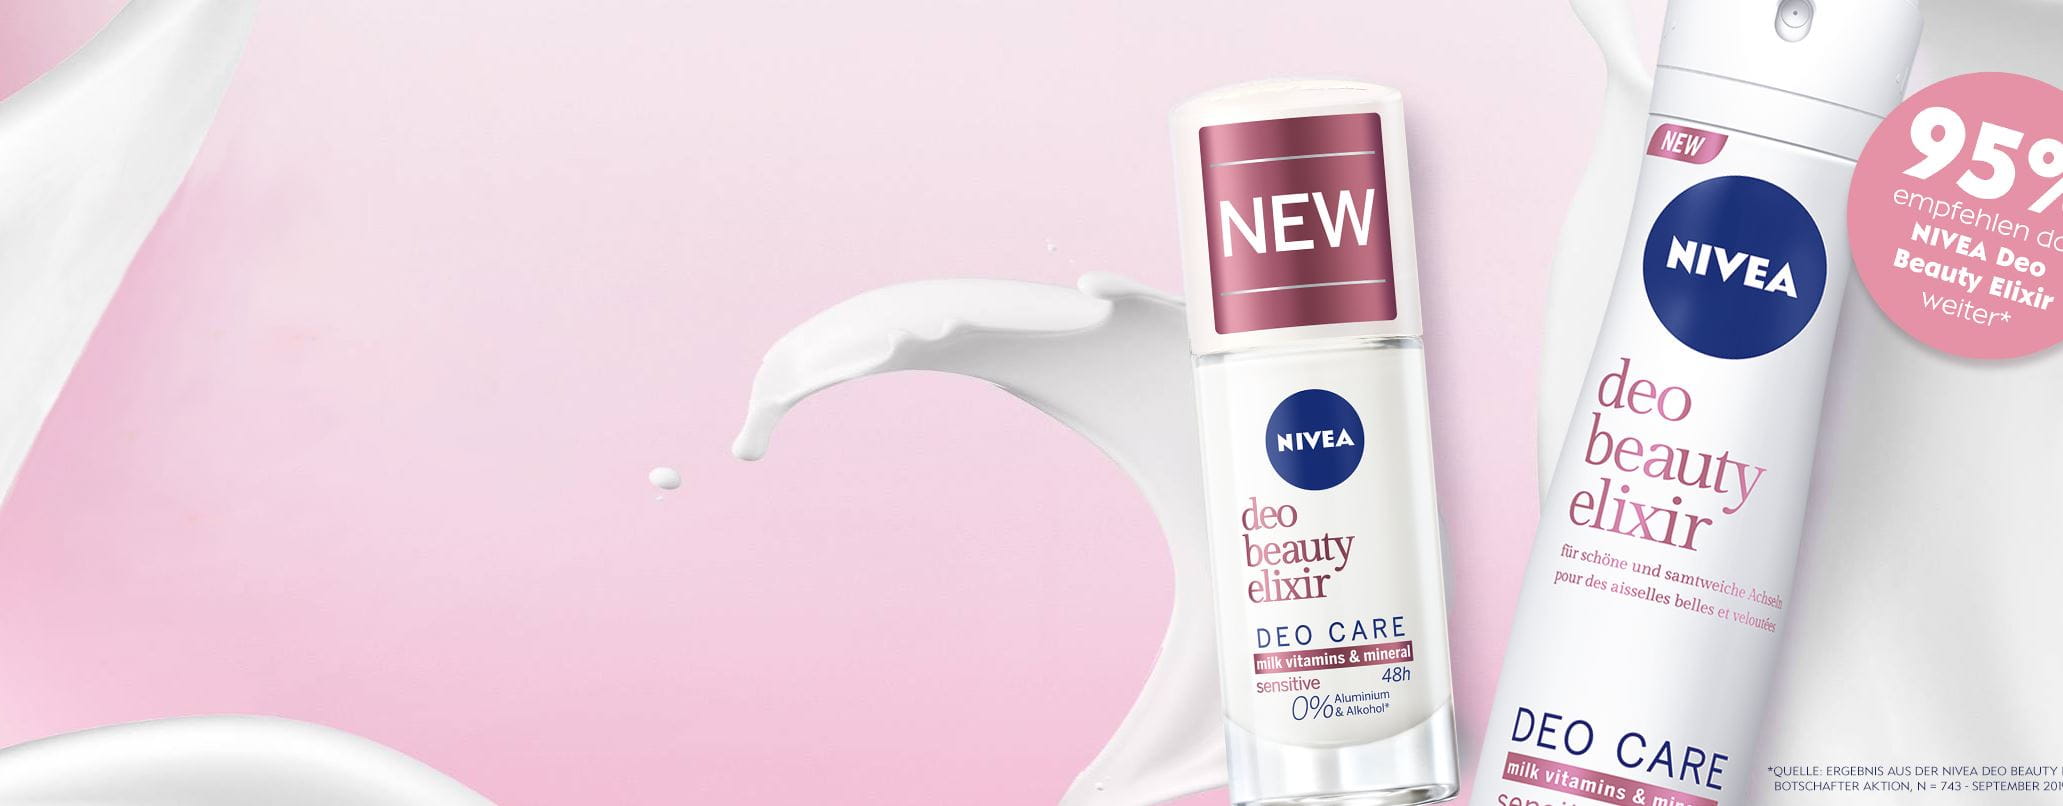 NIVEA Deo Beauty Elixir Header